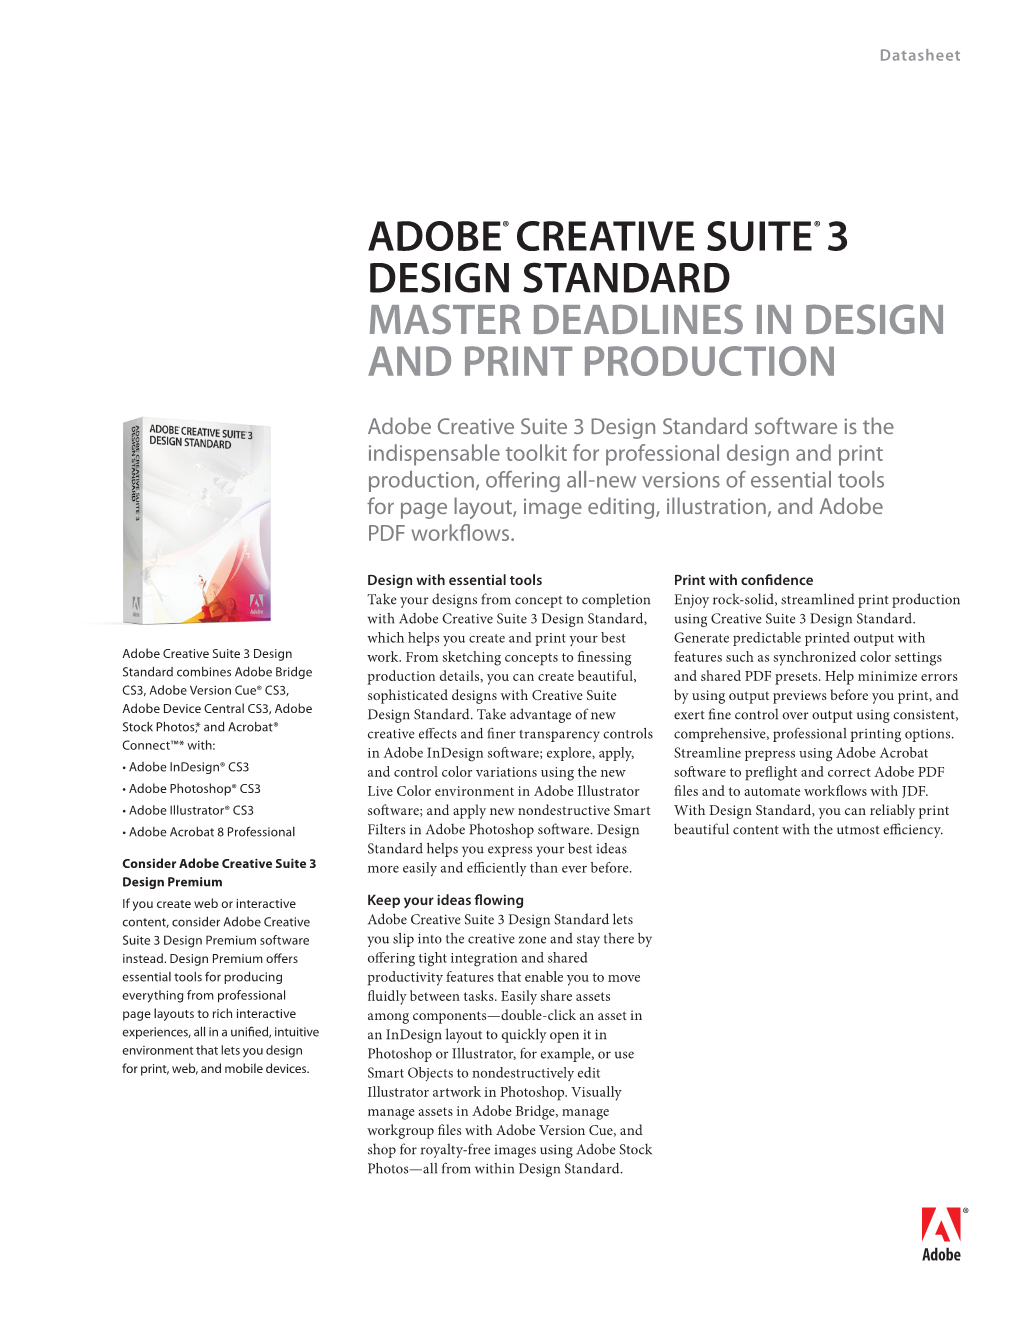 ADOBE® CREATIVE SUITE® 3 DESIGN STANDARD Master Deadlines in Design and Print Production